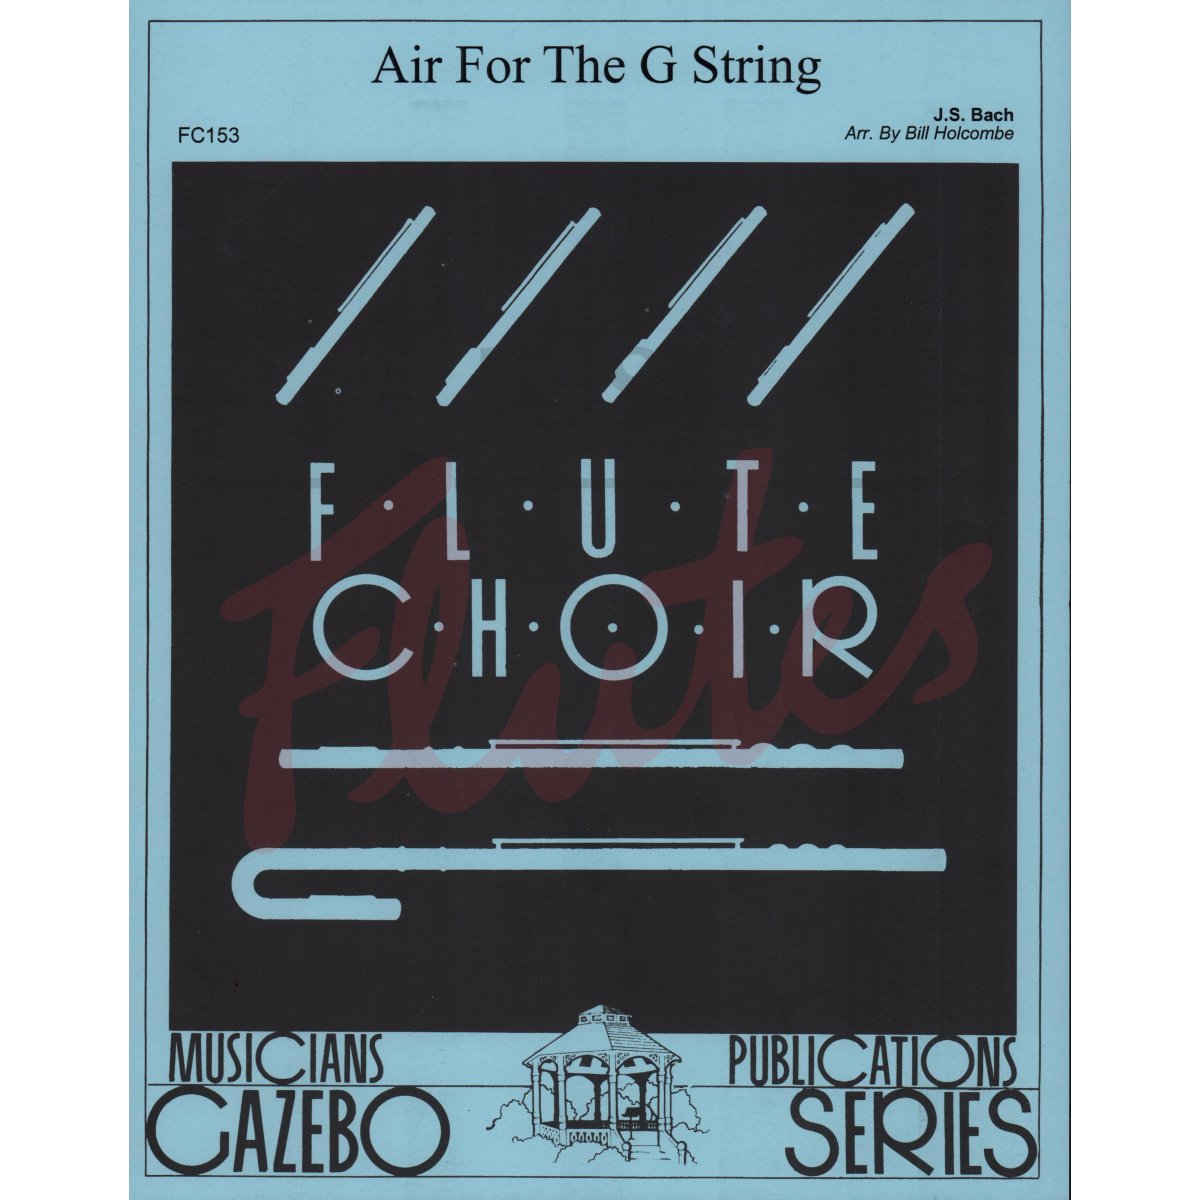 Air for the G String for Flute Choir